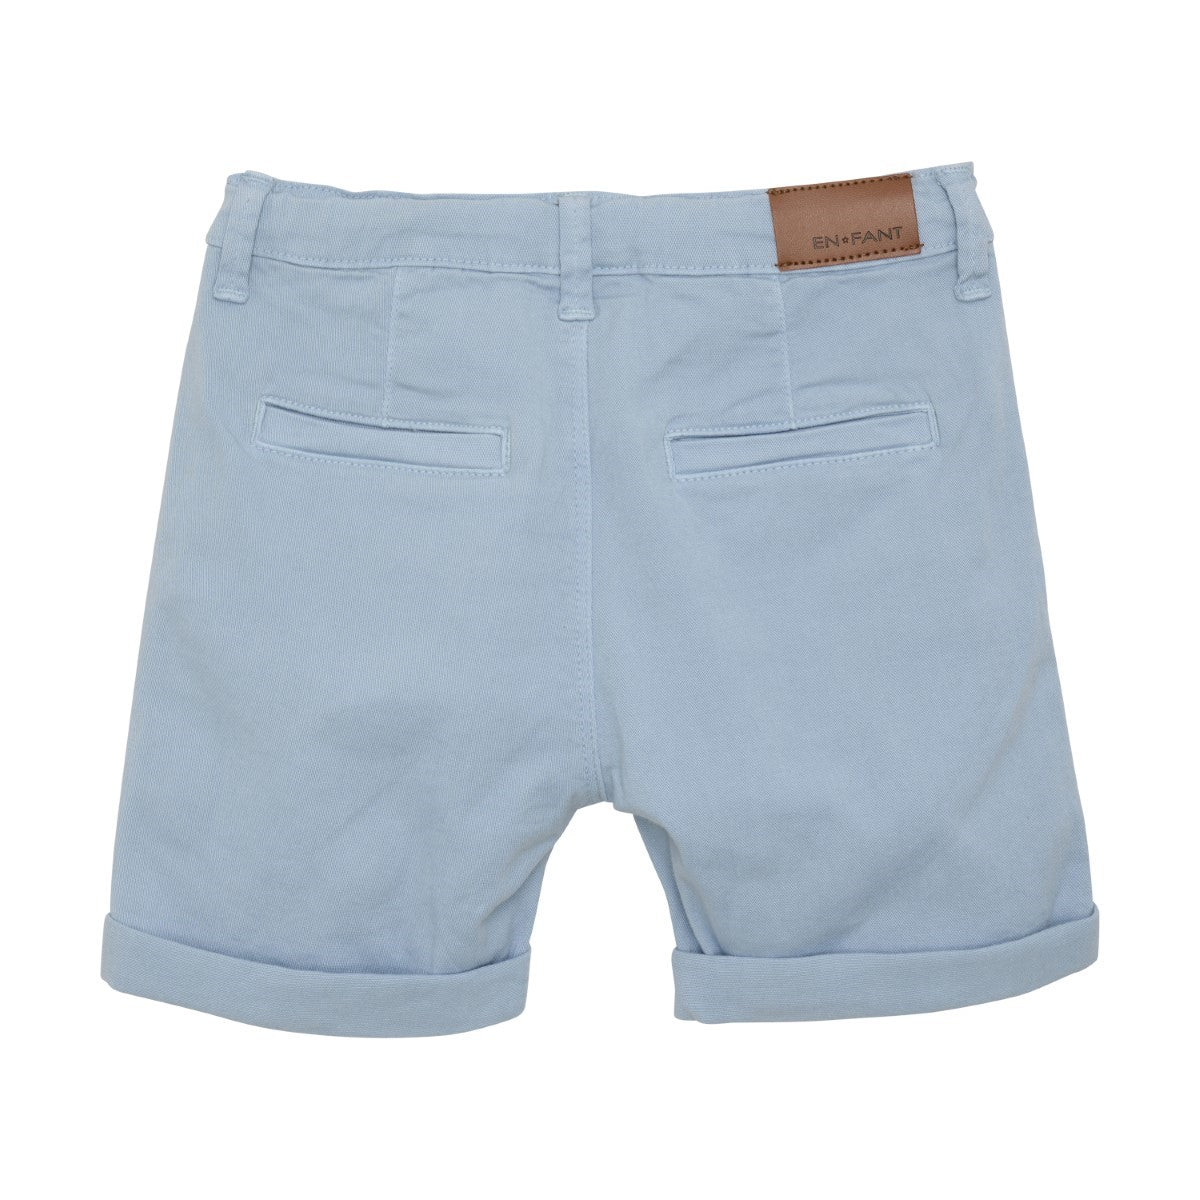 Woven Shorts- Dusty Blue